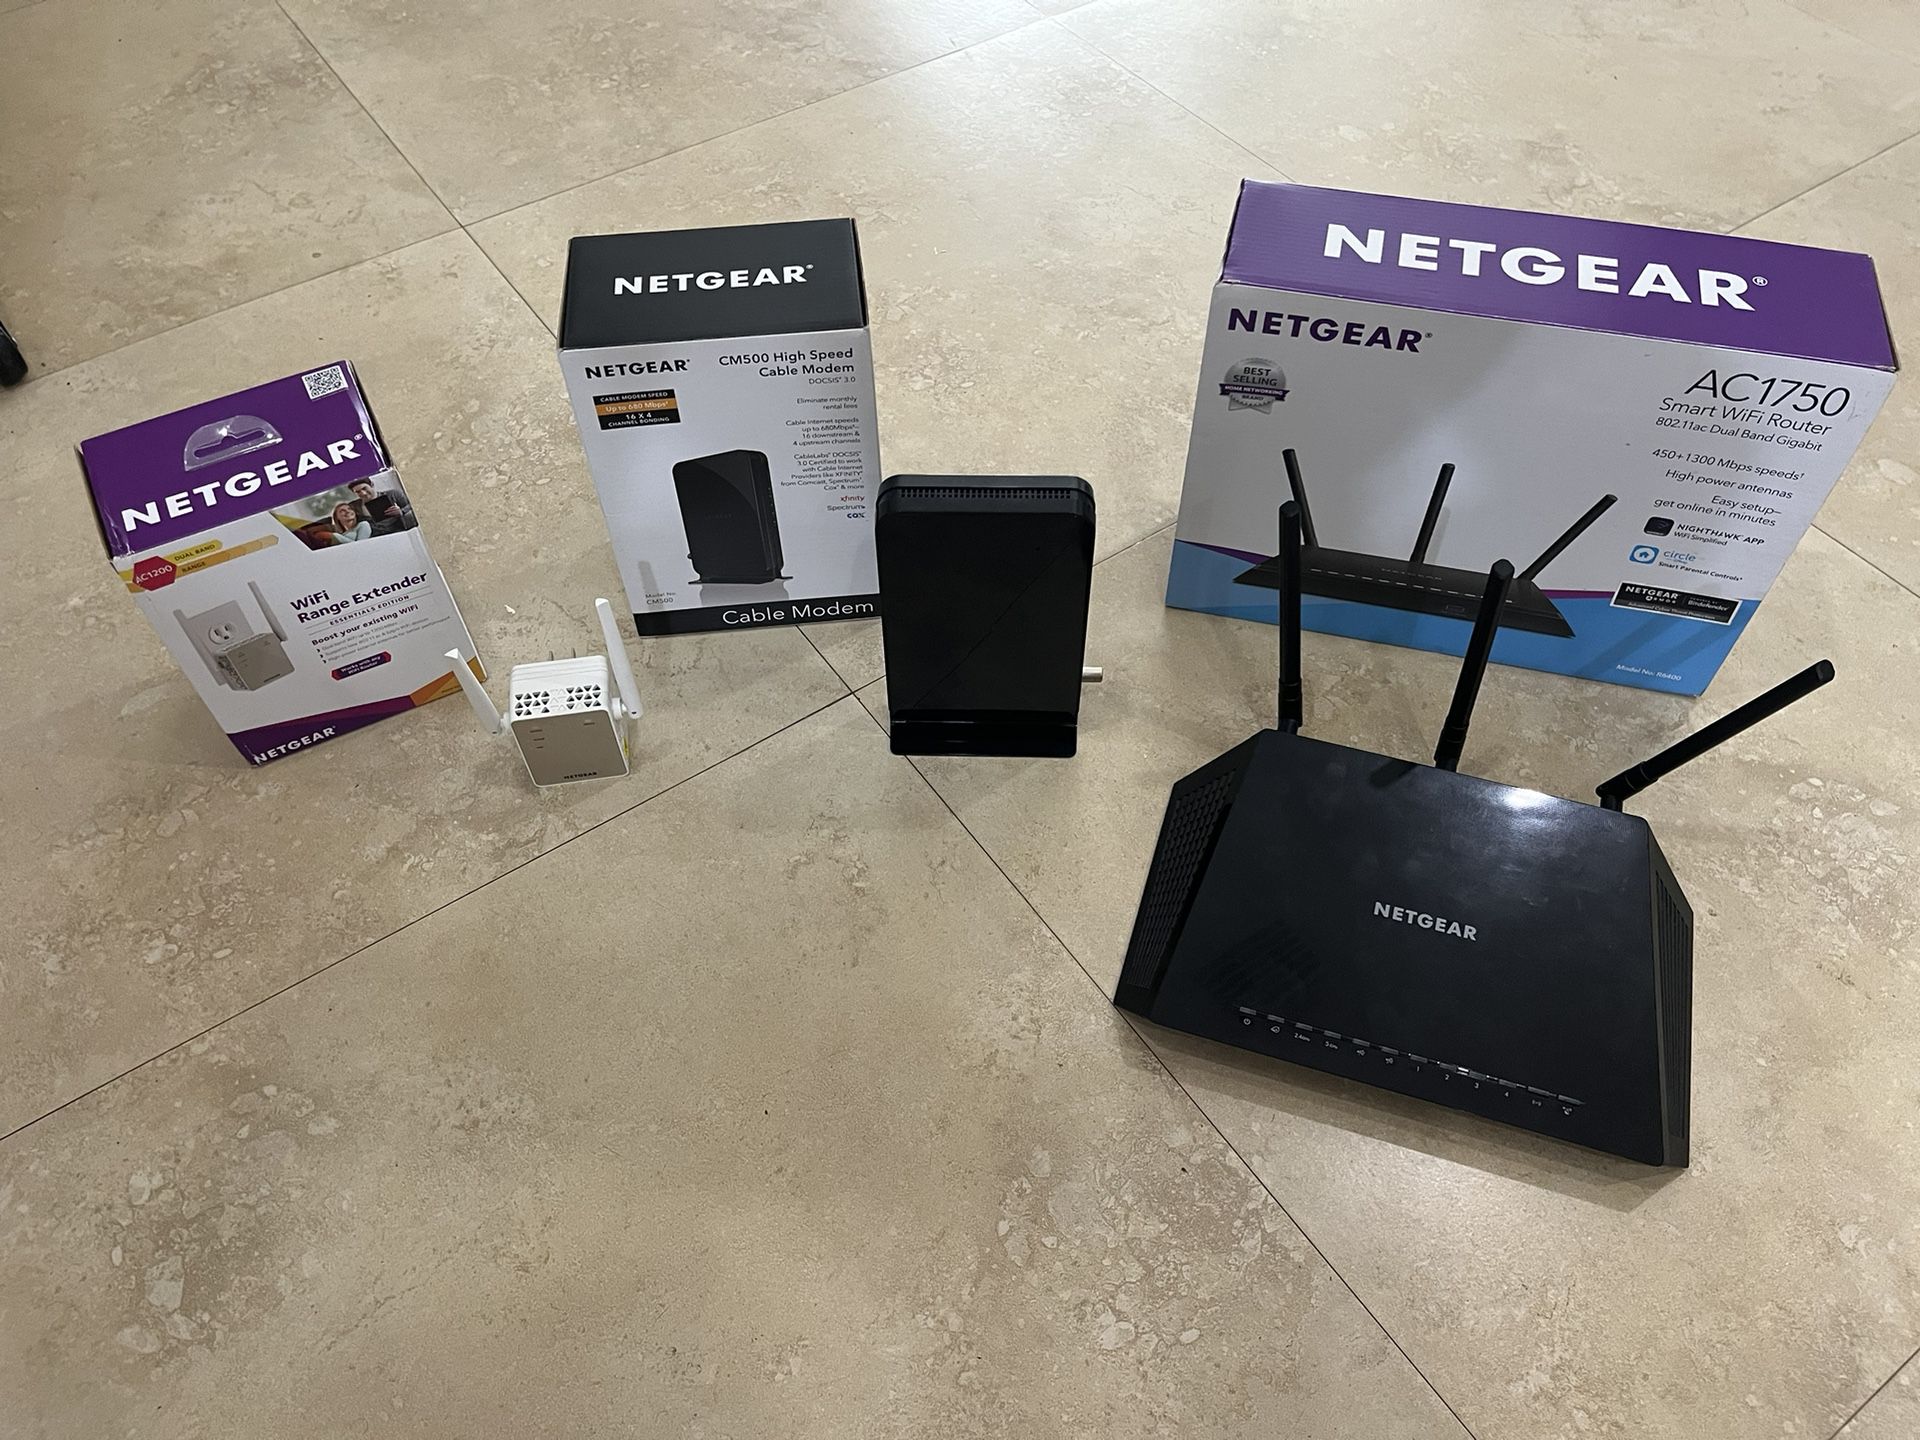 Netgear Complete Kit Smart Wifi Router AC1750 Netgear CM500 high Speed Cable Modem Netgear Wifi Range Extender AC1200 Compatible For For Camcast 